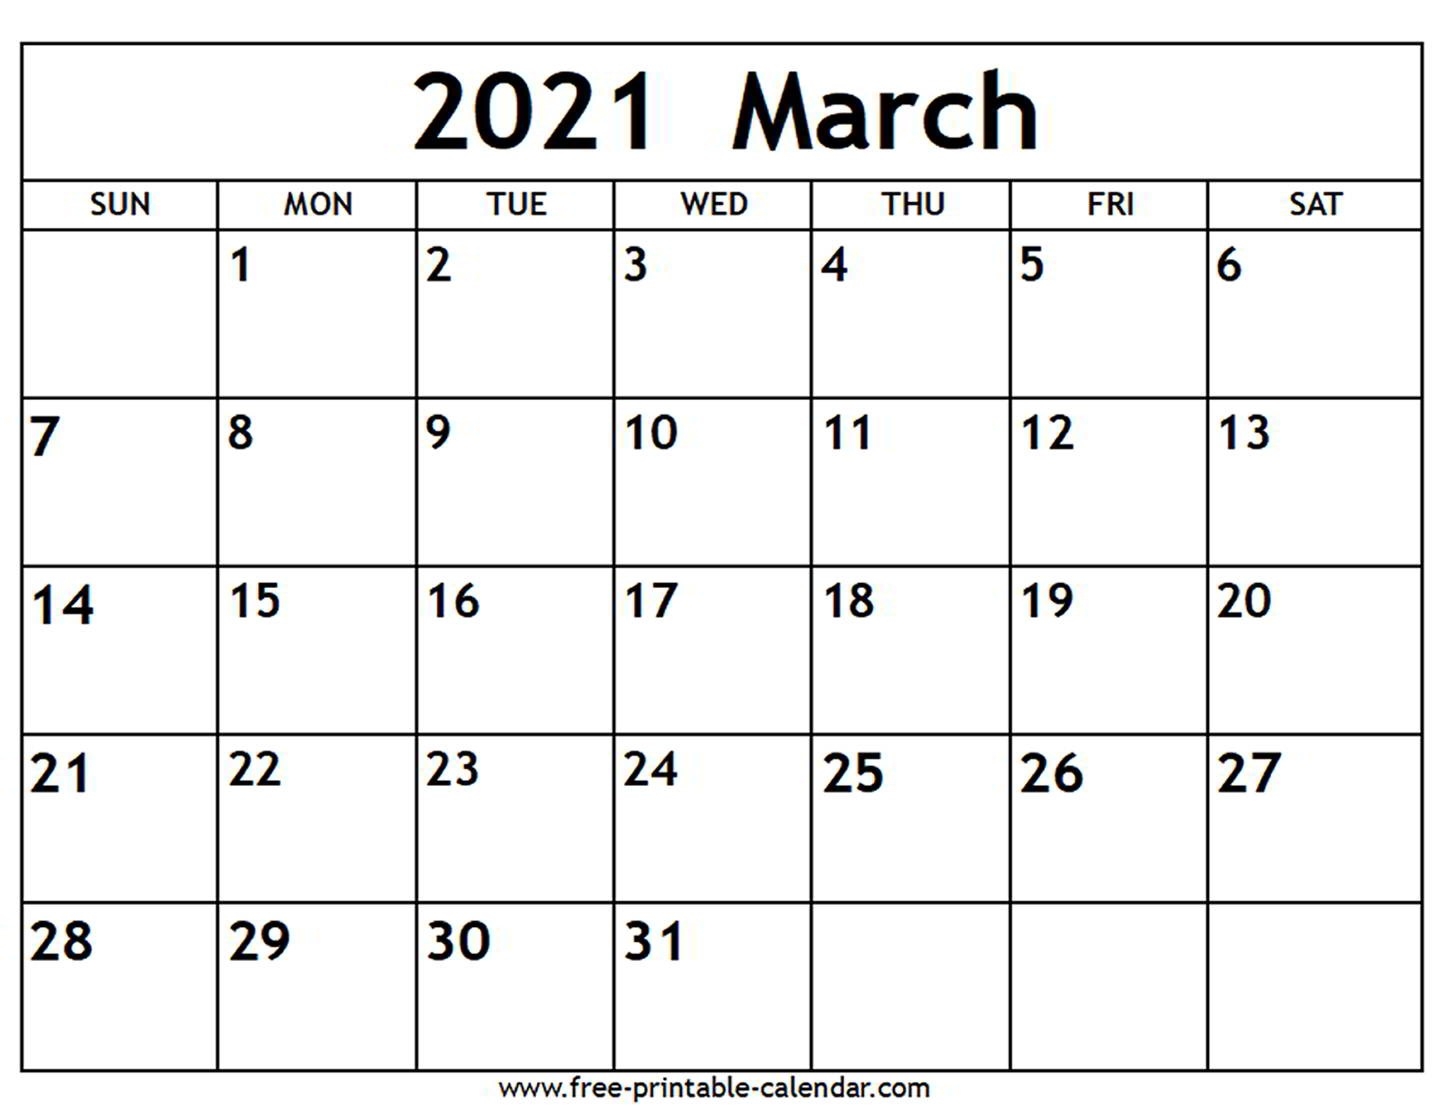 March 2021 Calendar - Free-Printable-Calendar-Blank Calendar Pages March 2021